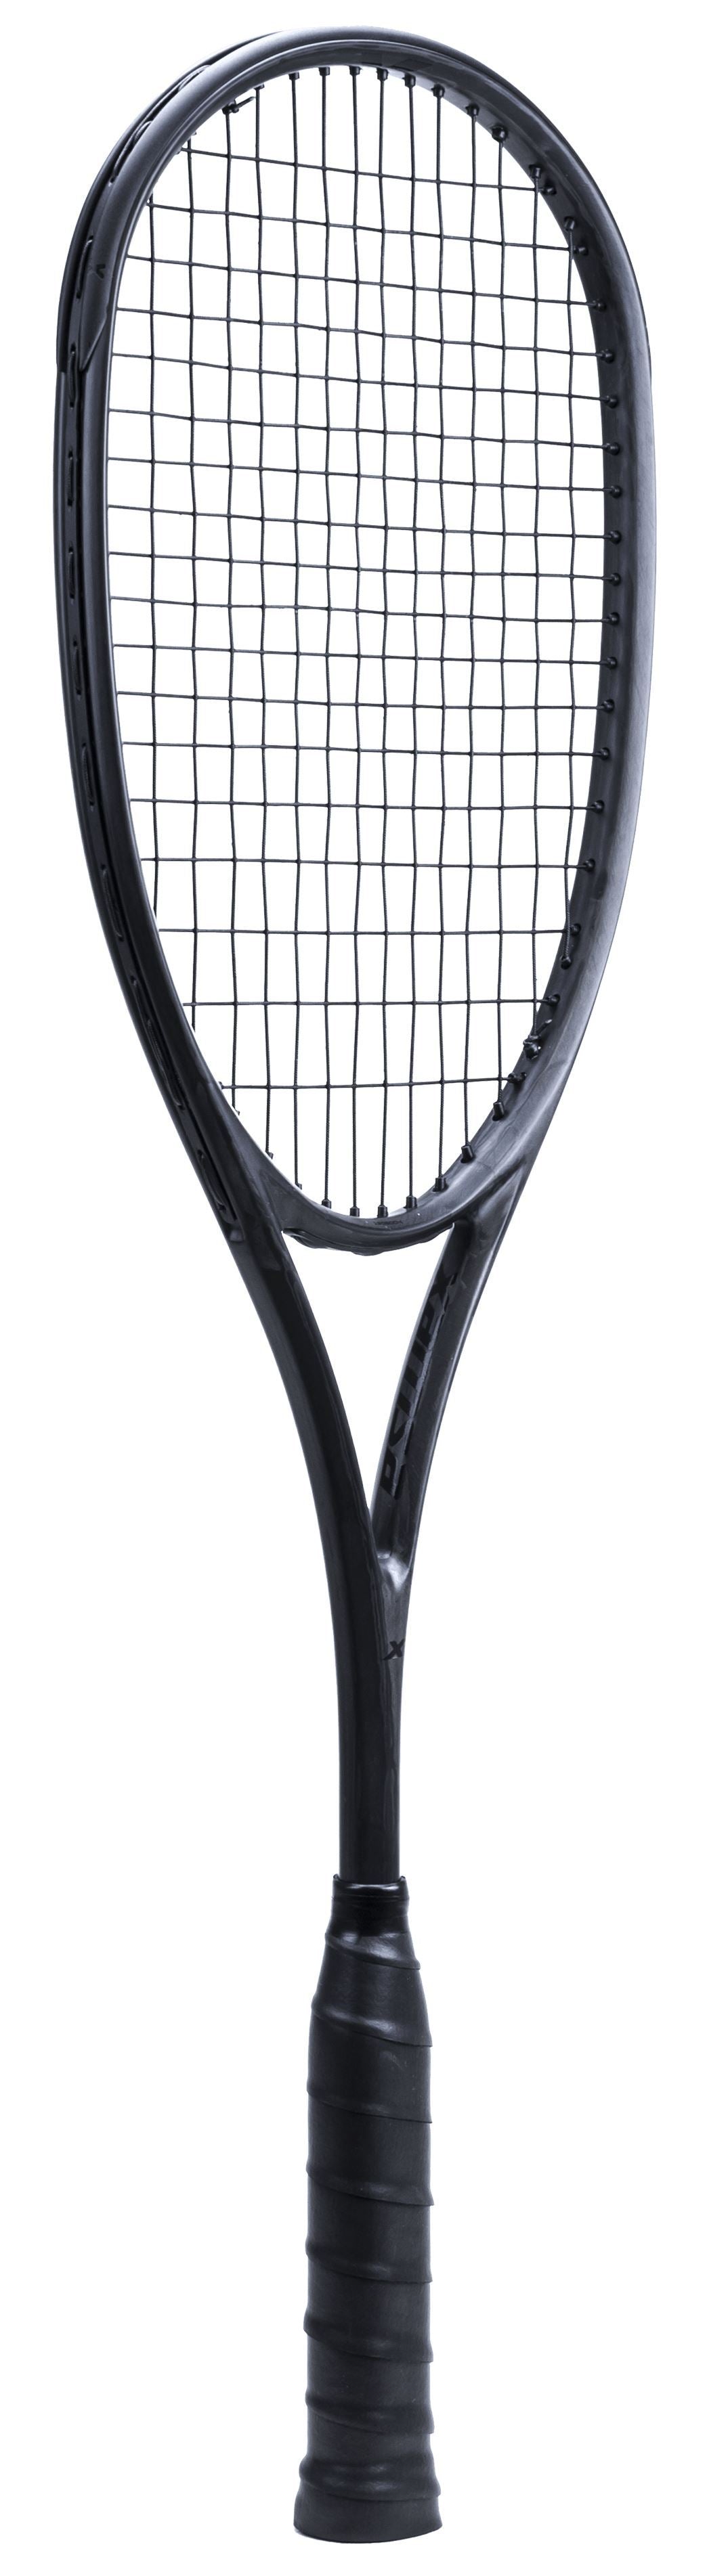 Xamsa Obsidian Incognito Squash Racquet Squash Racquets Xamsa Strung with Xamsa PM18 